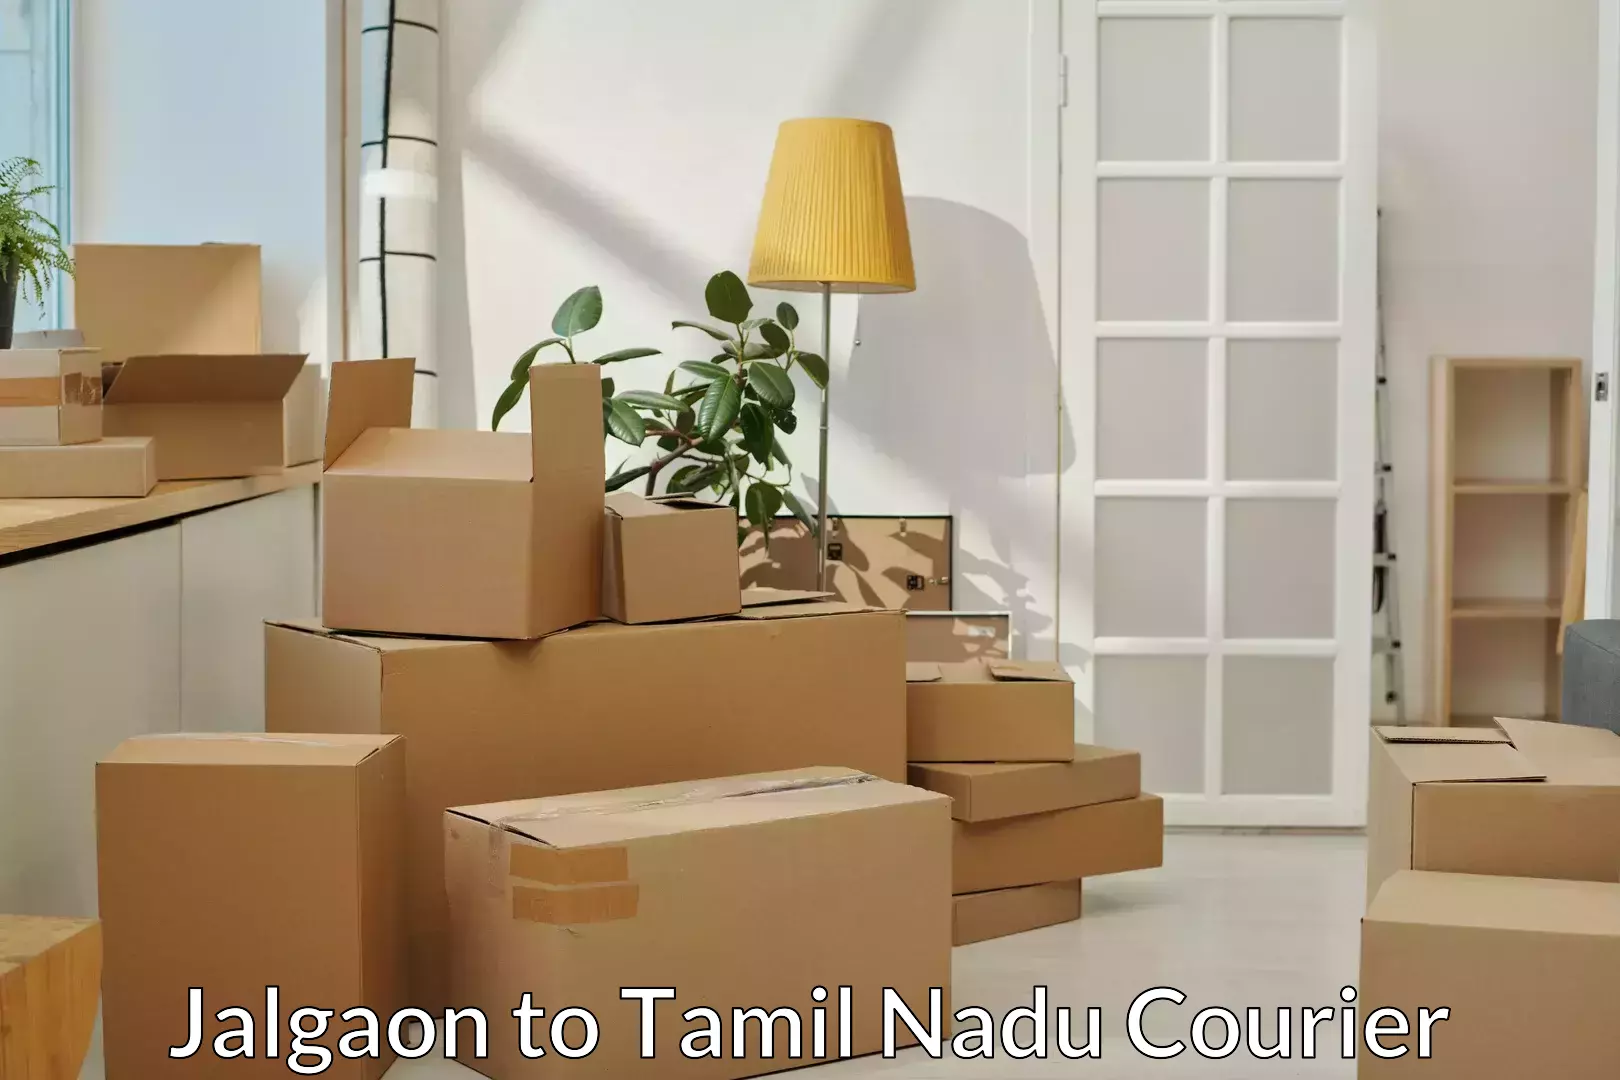 Moving and packing experts Jalgaon to Thiruvadanai